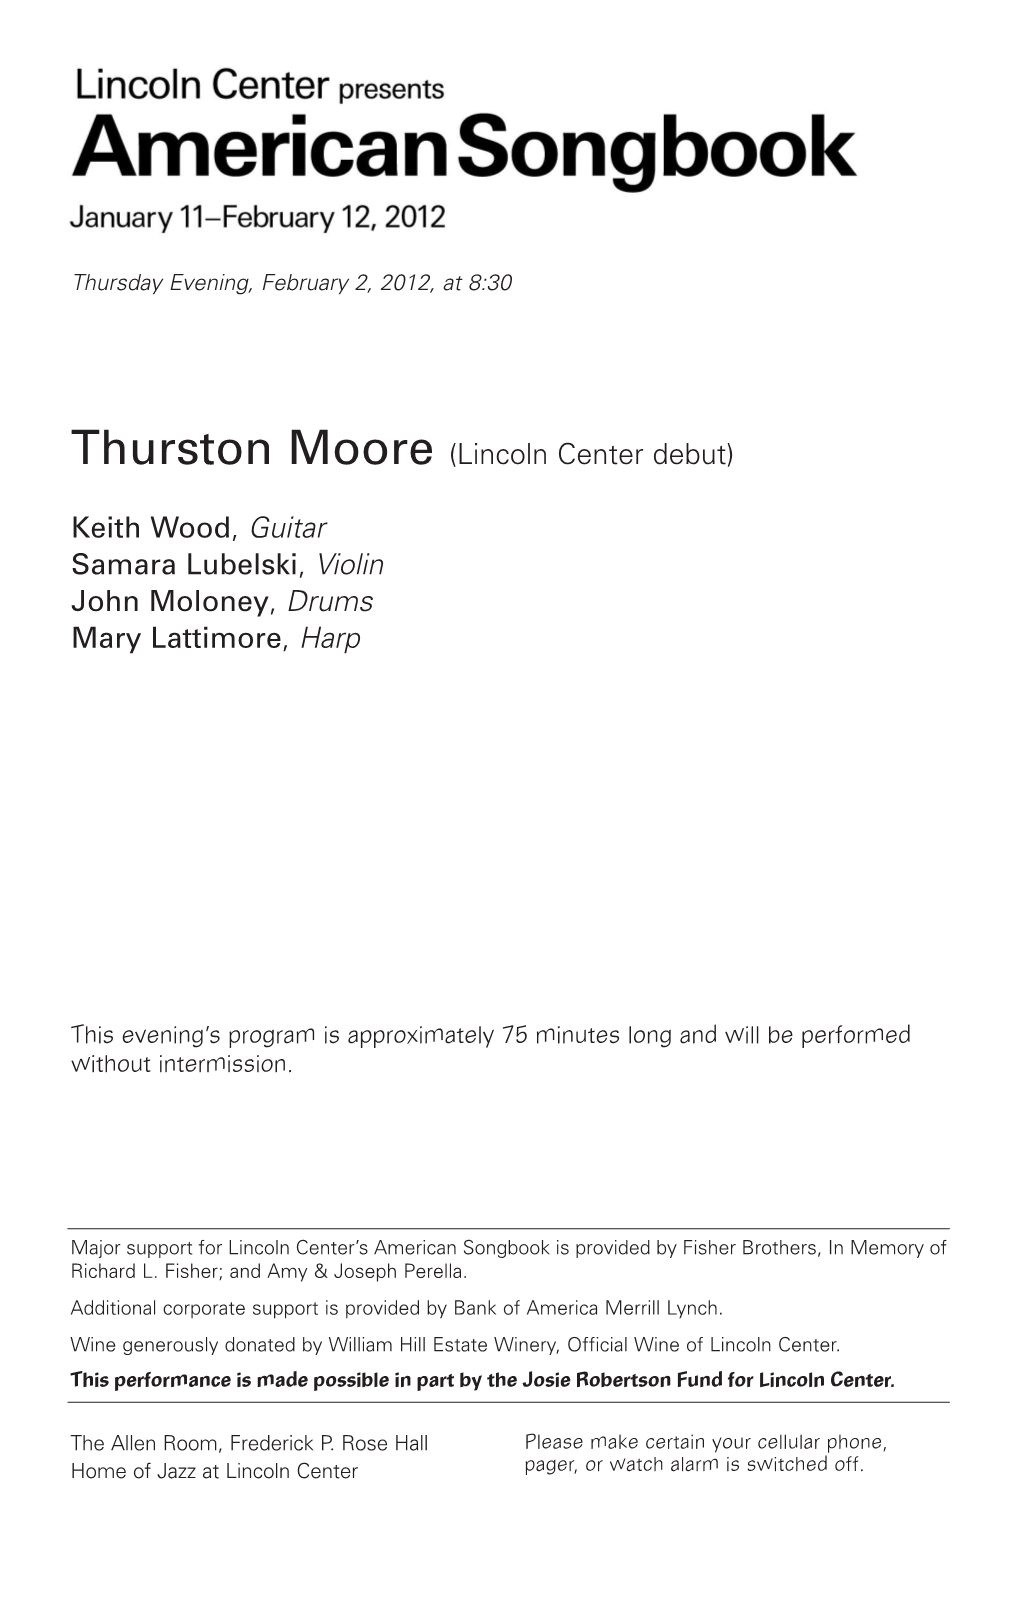 Thurston Moore (Lincoln Center Debut)